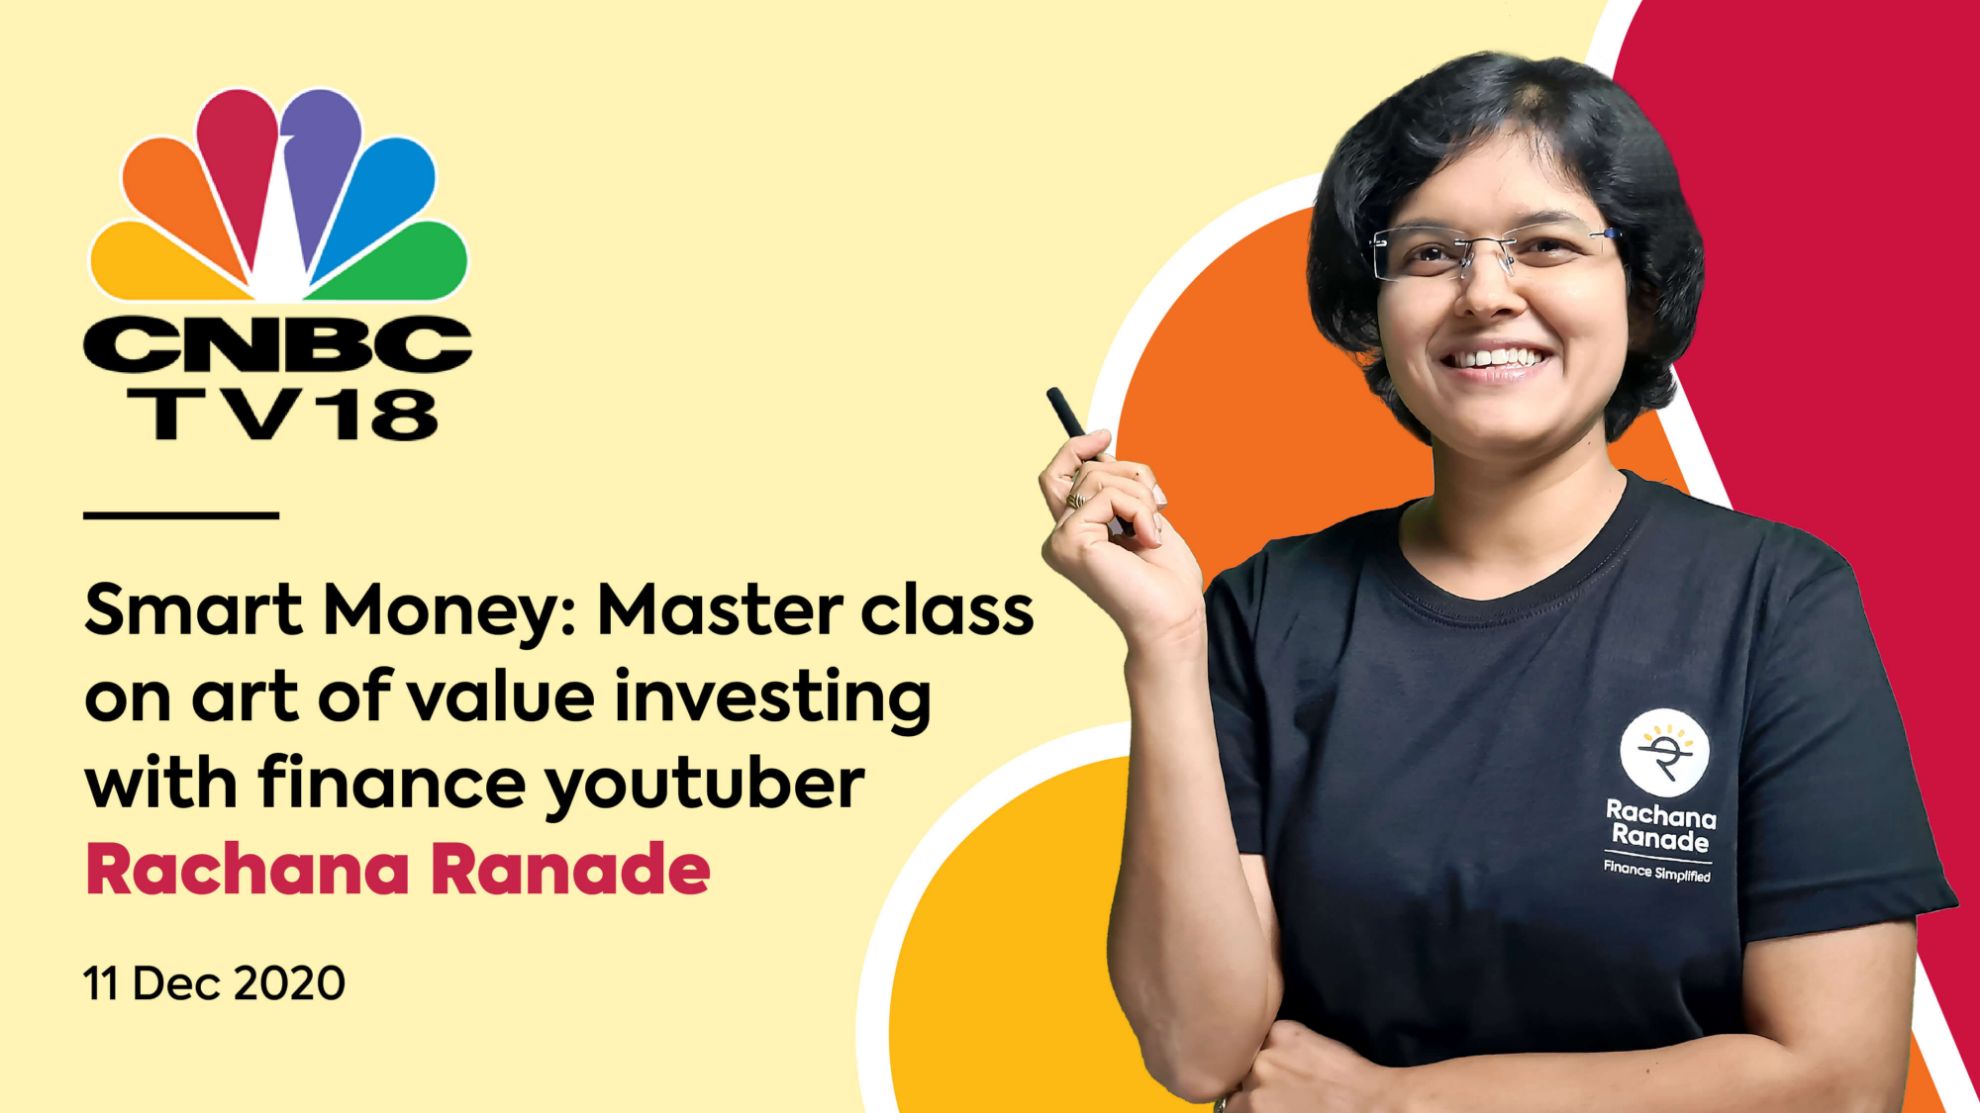 Smart Money: Master class on art of value investing with finance youtuber Rachana Ranade